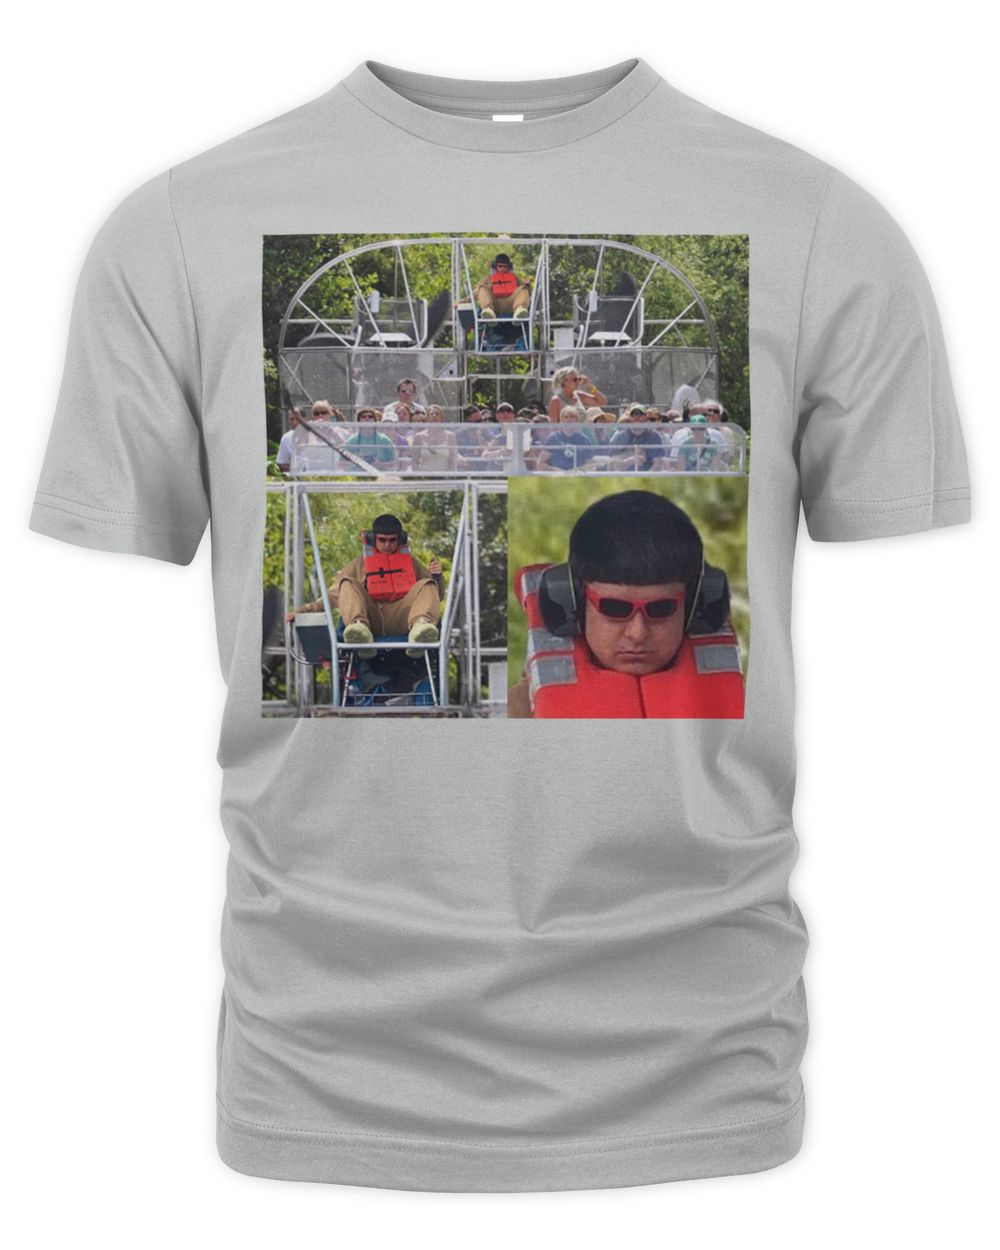 Oliver Tree Merch Florida Swamp Meme Shirt Unisex Premium T-Shirt silver 